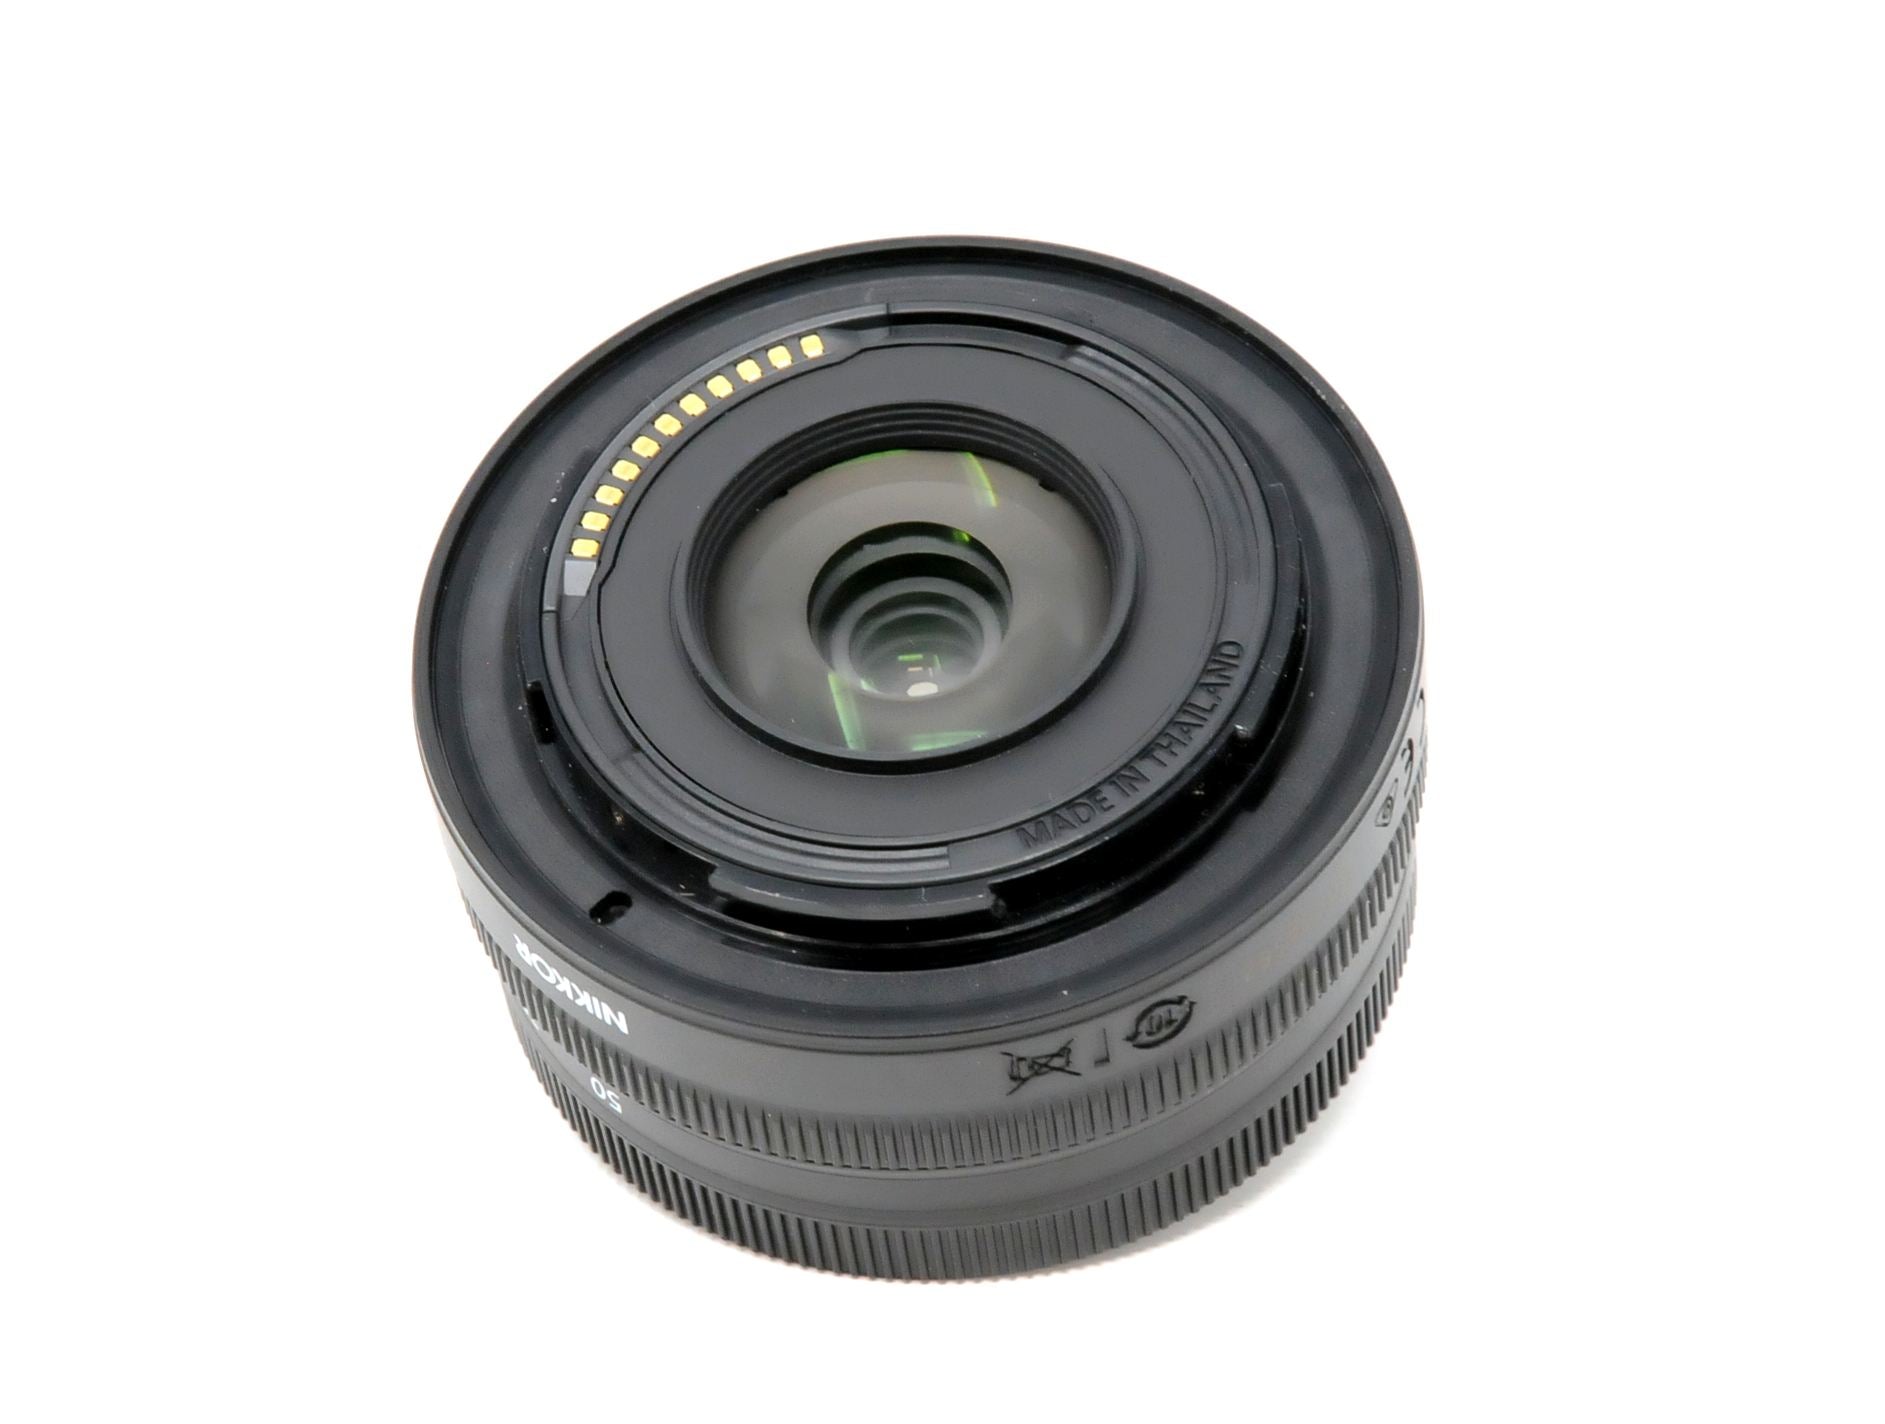 Used Nikon Z DX 16-50mm F3.5/6.3 VR Lens with hood. (SH37699)